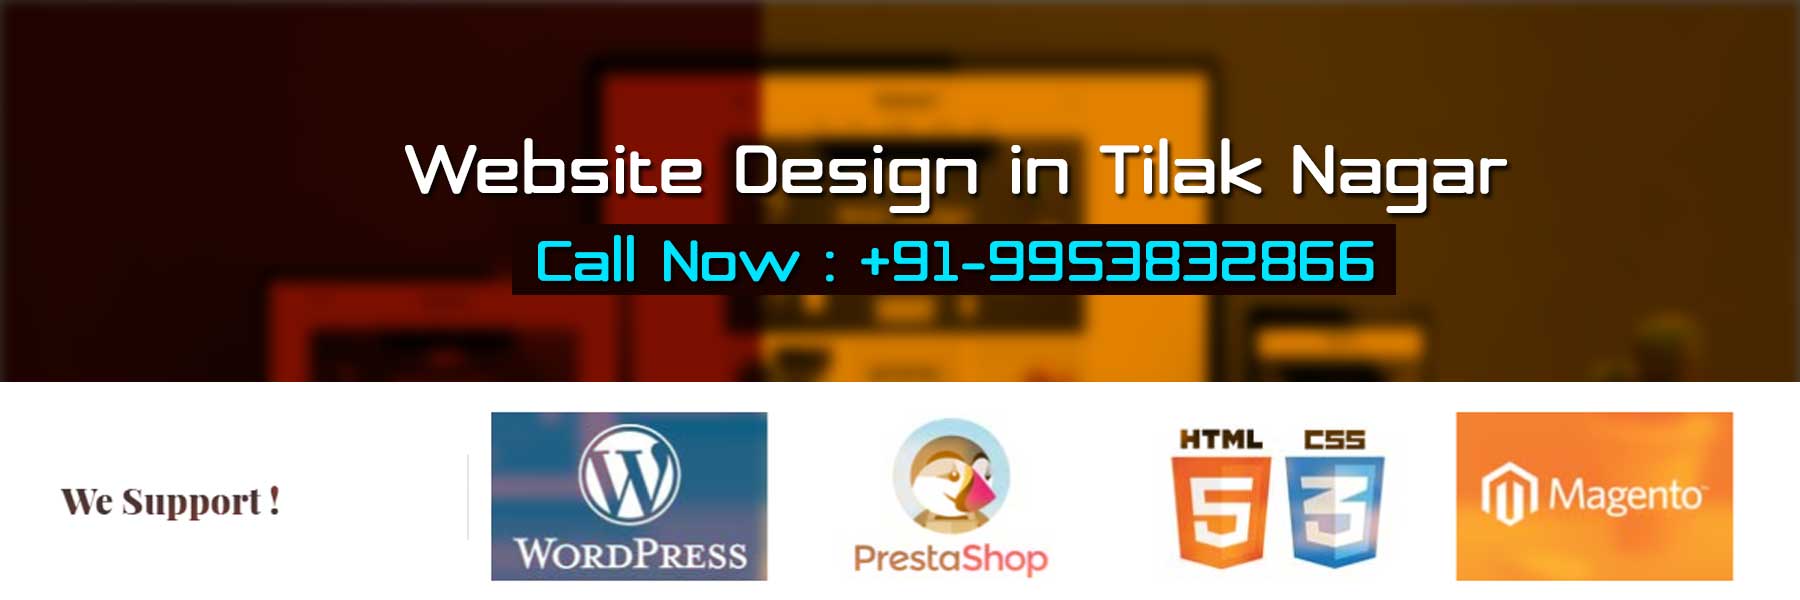 Website Design in Tilak Nagar